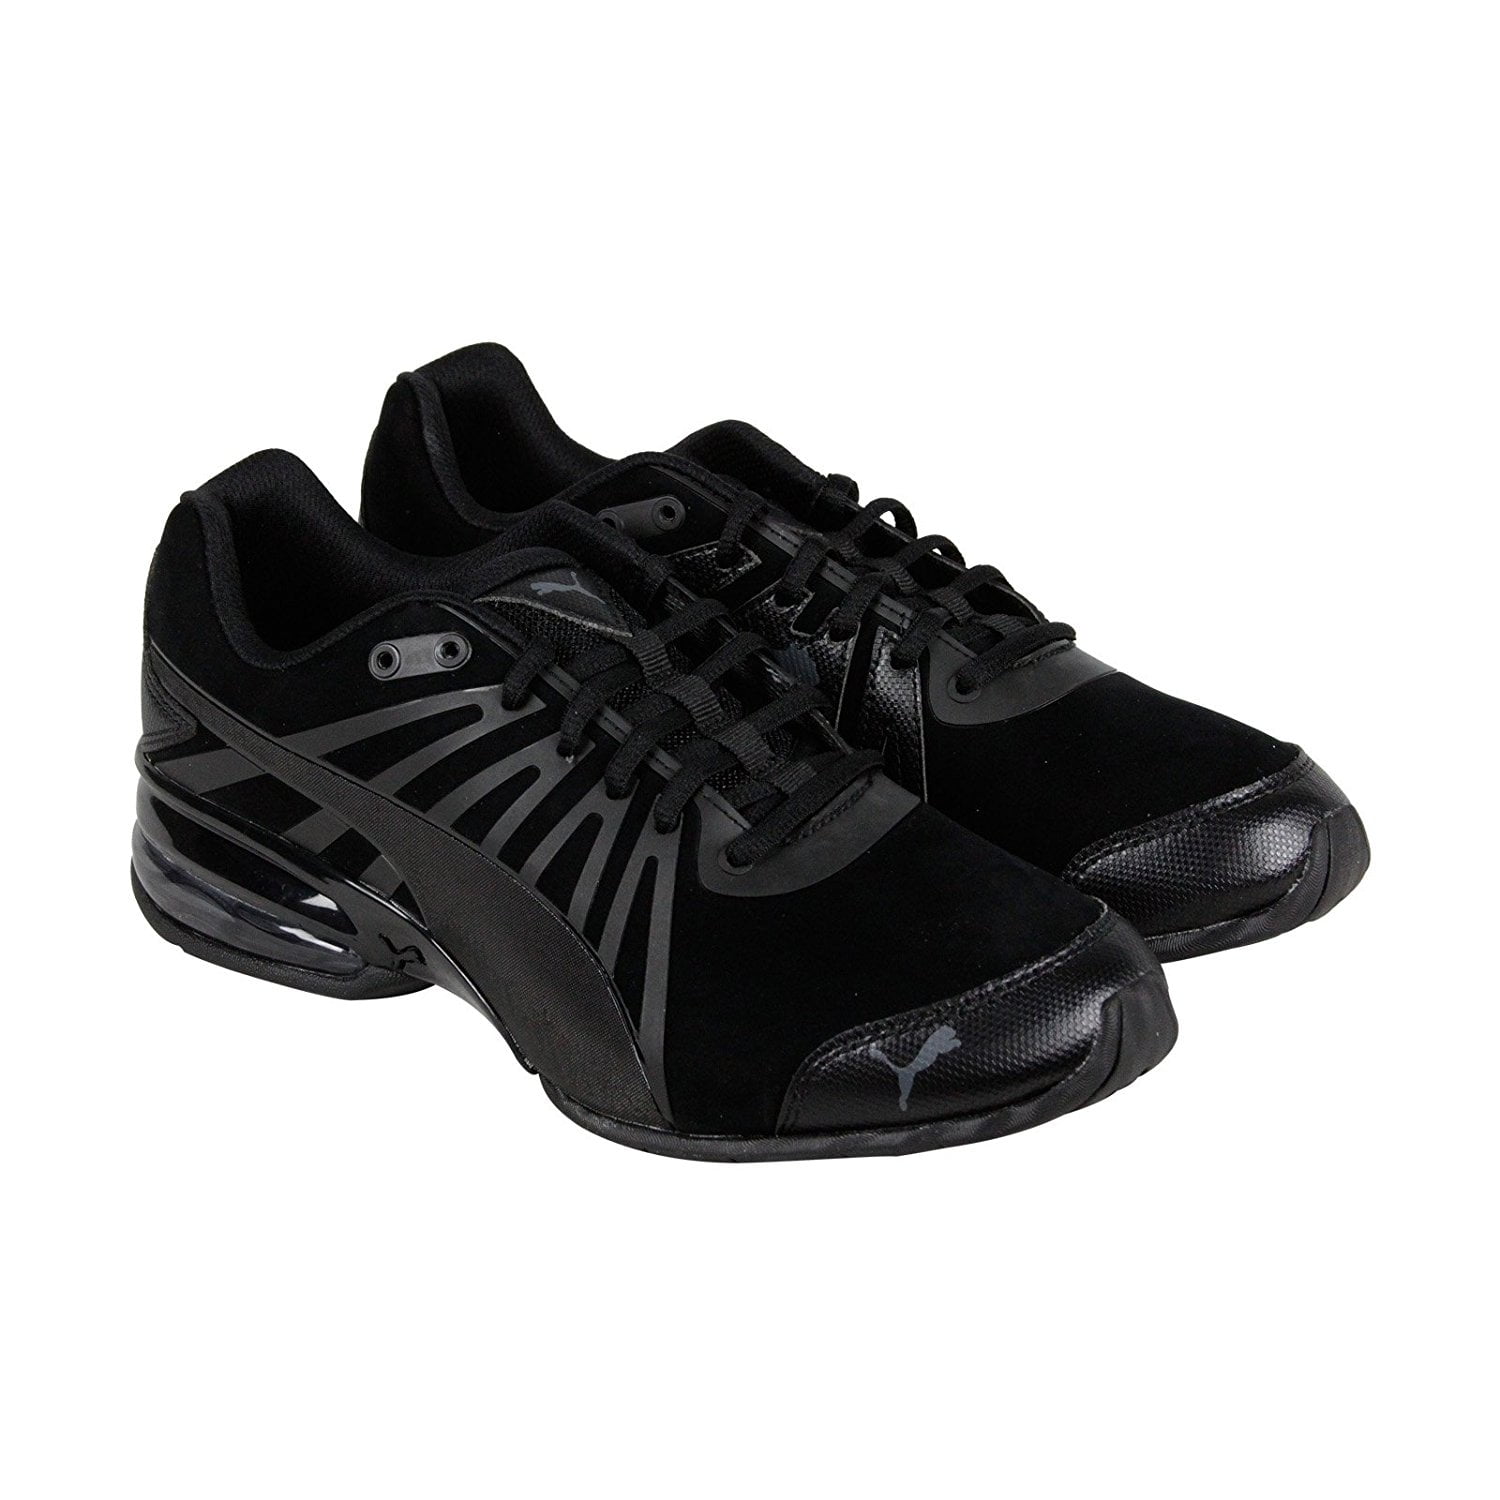 Puma Mens Cell Kilter Nubuck Training Shoes (Black, -